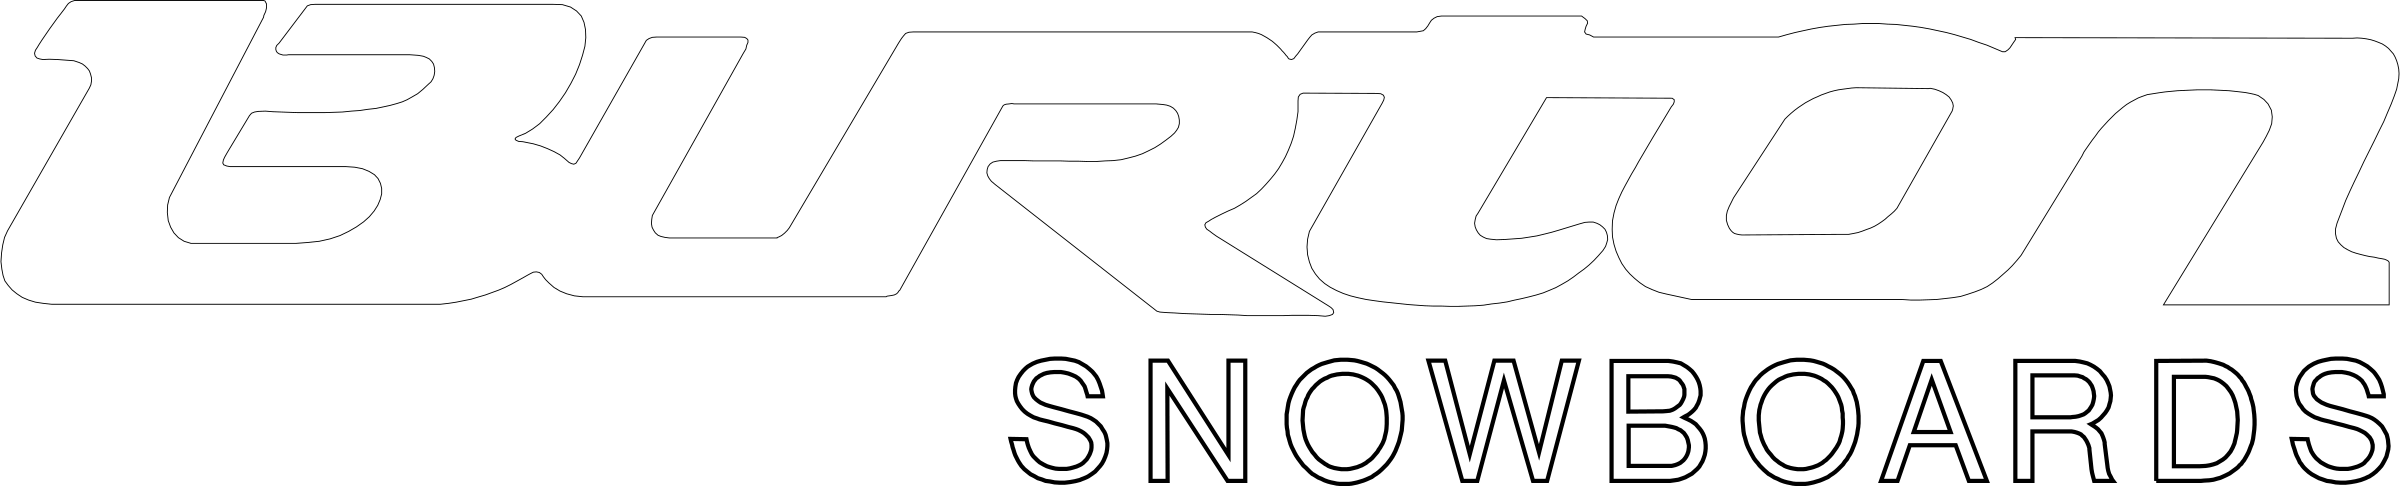 Burton Snowboards Logo - Burton Snowboards Logo PNG Transparent & SVG Vector - Freebie Supply